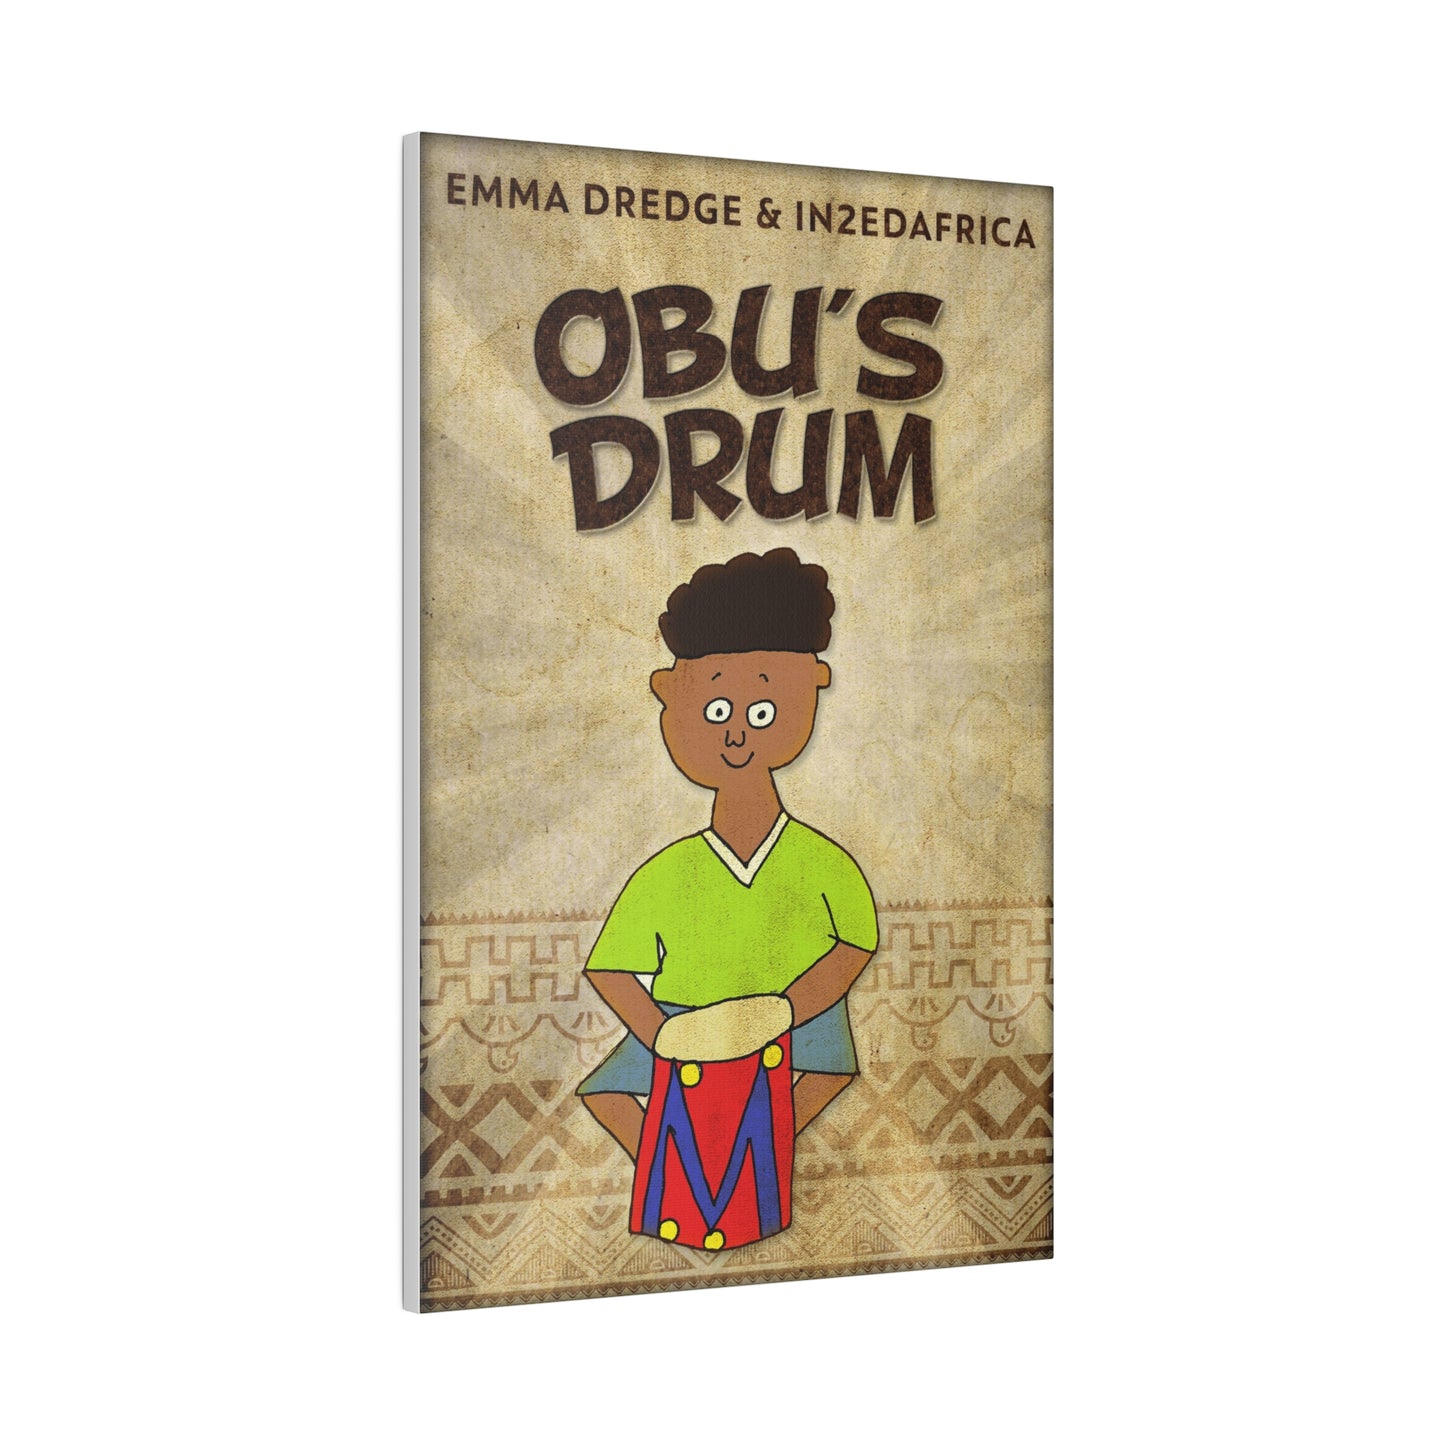 Obu's Drum - Canvas